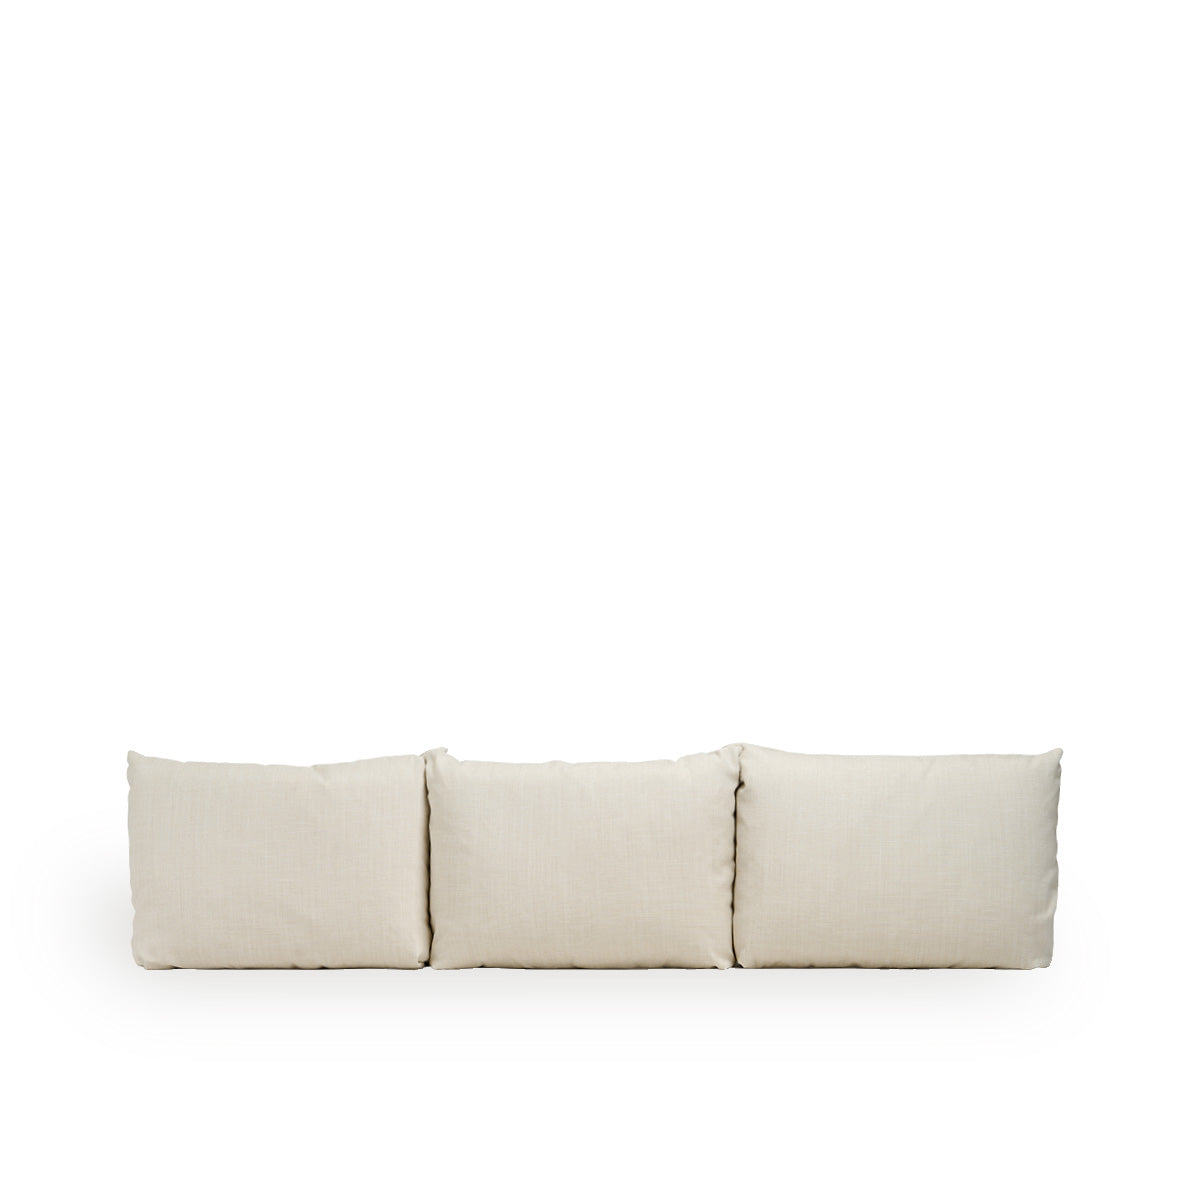 Sofa Back Cushions – Call Today! (248) 837-2430